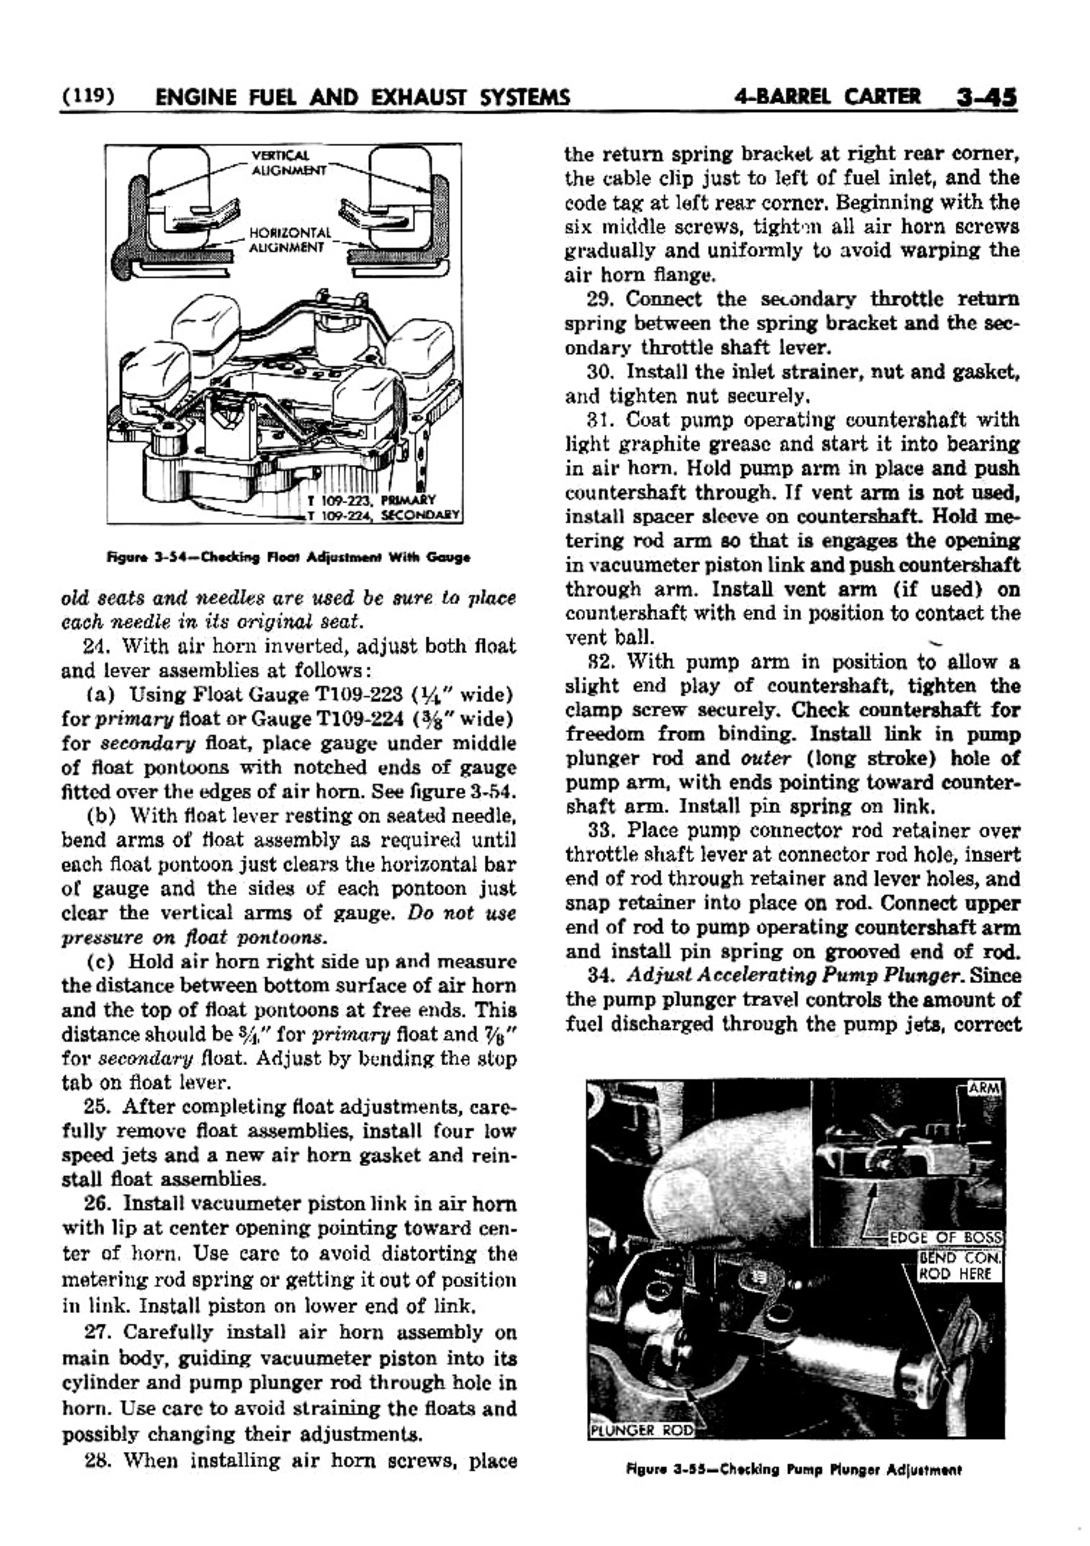 n_04 1952 Buick Shop Manual - Engine Fuel & Exhaust-045-045.jpg